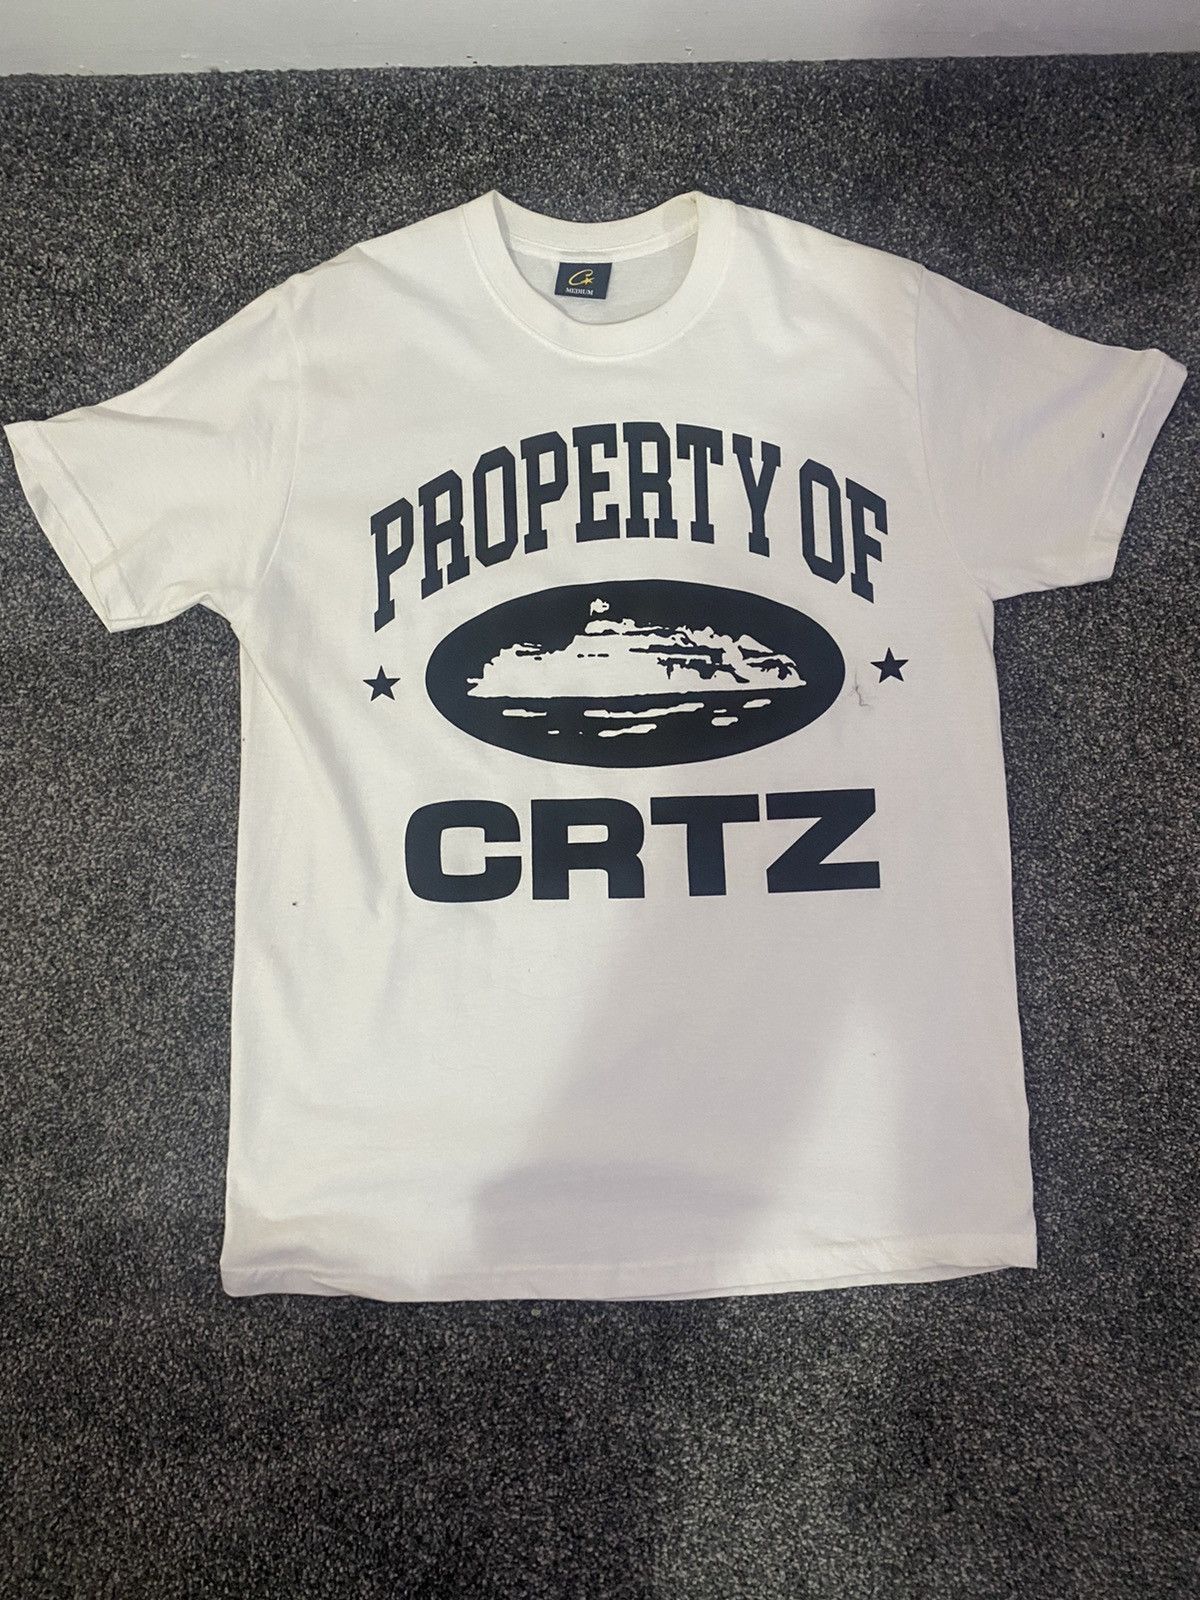 Crtz T Shirt | Grailed